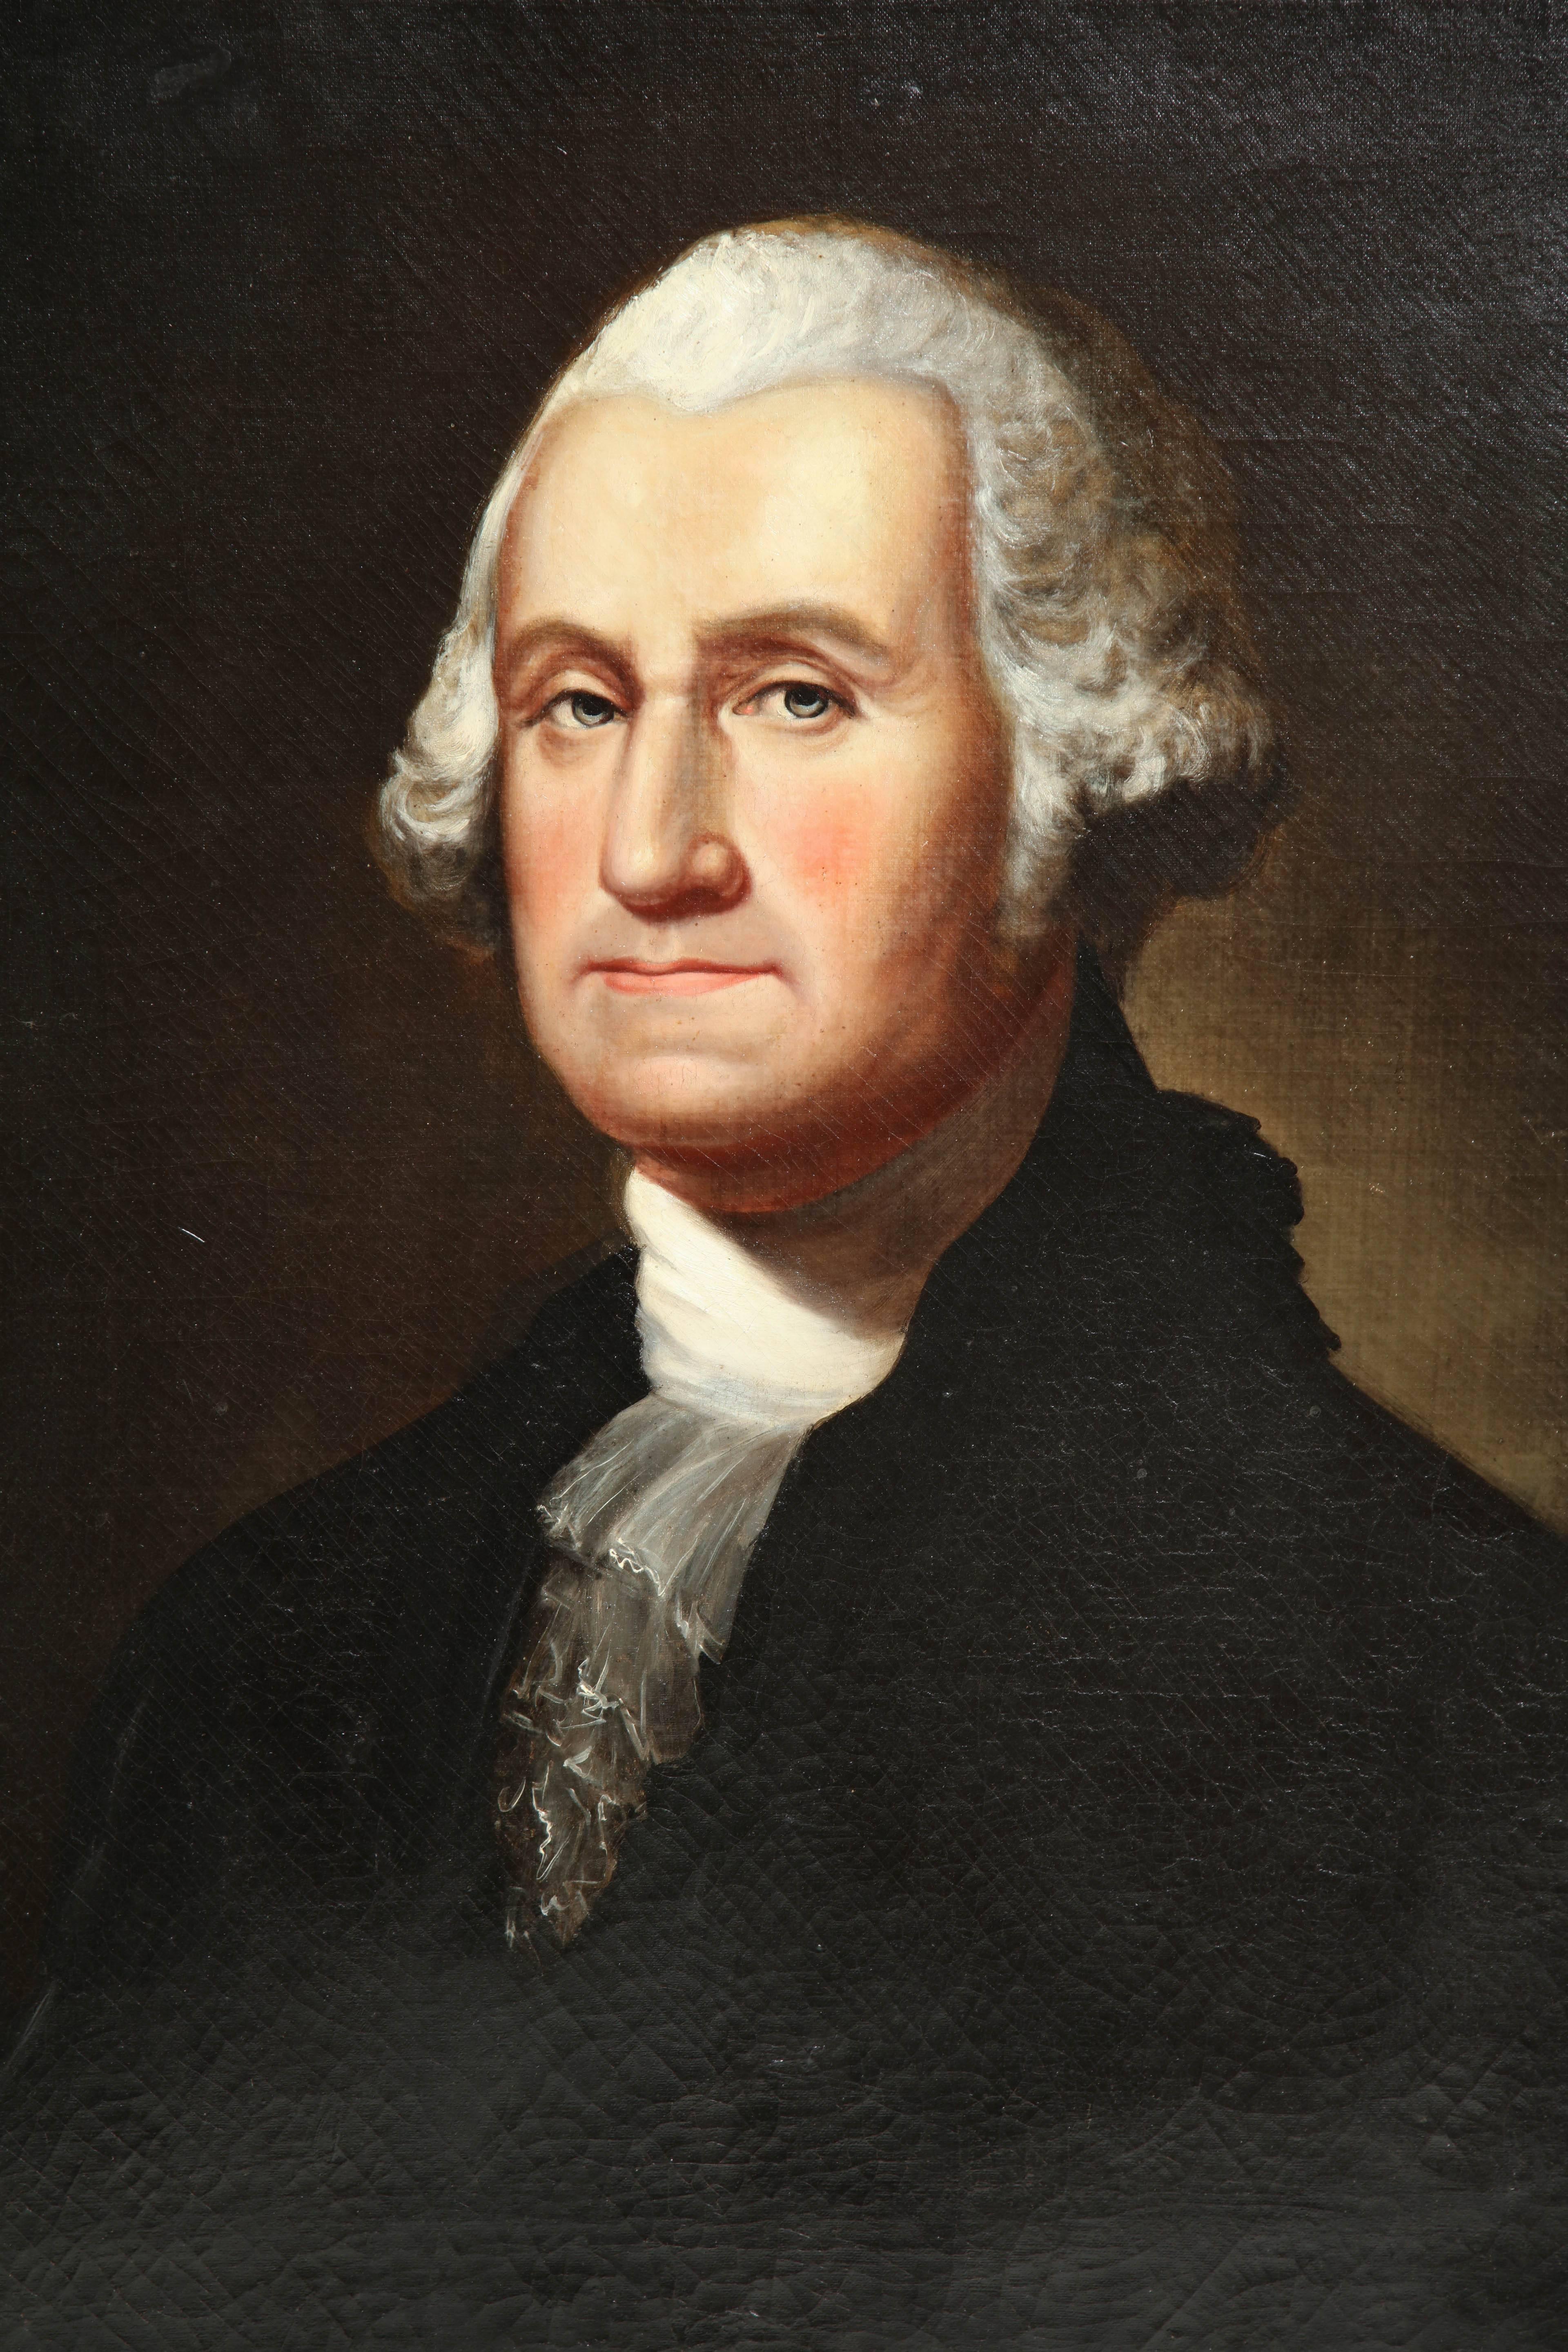 A 19th century oil on canvas portrait of George Washington.